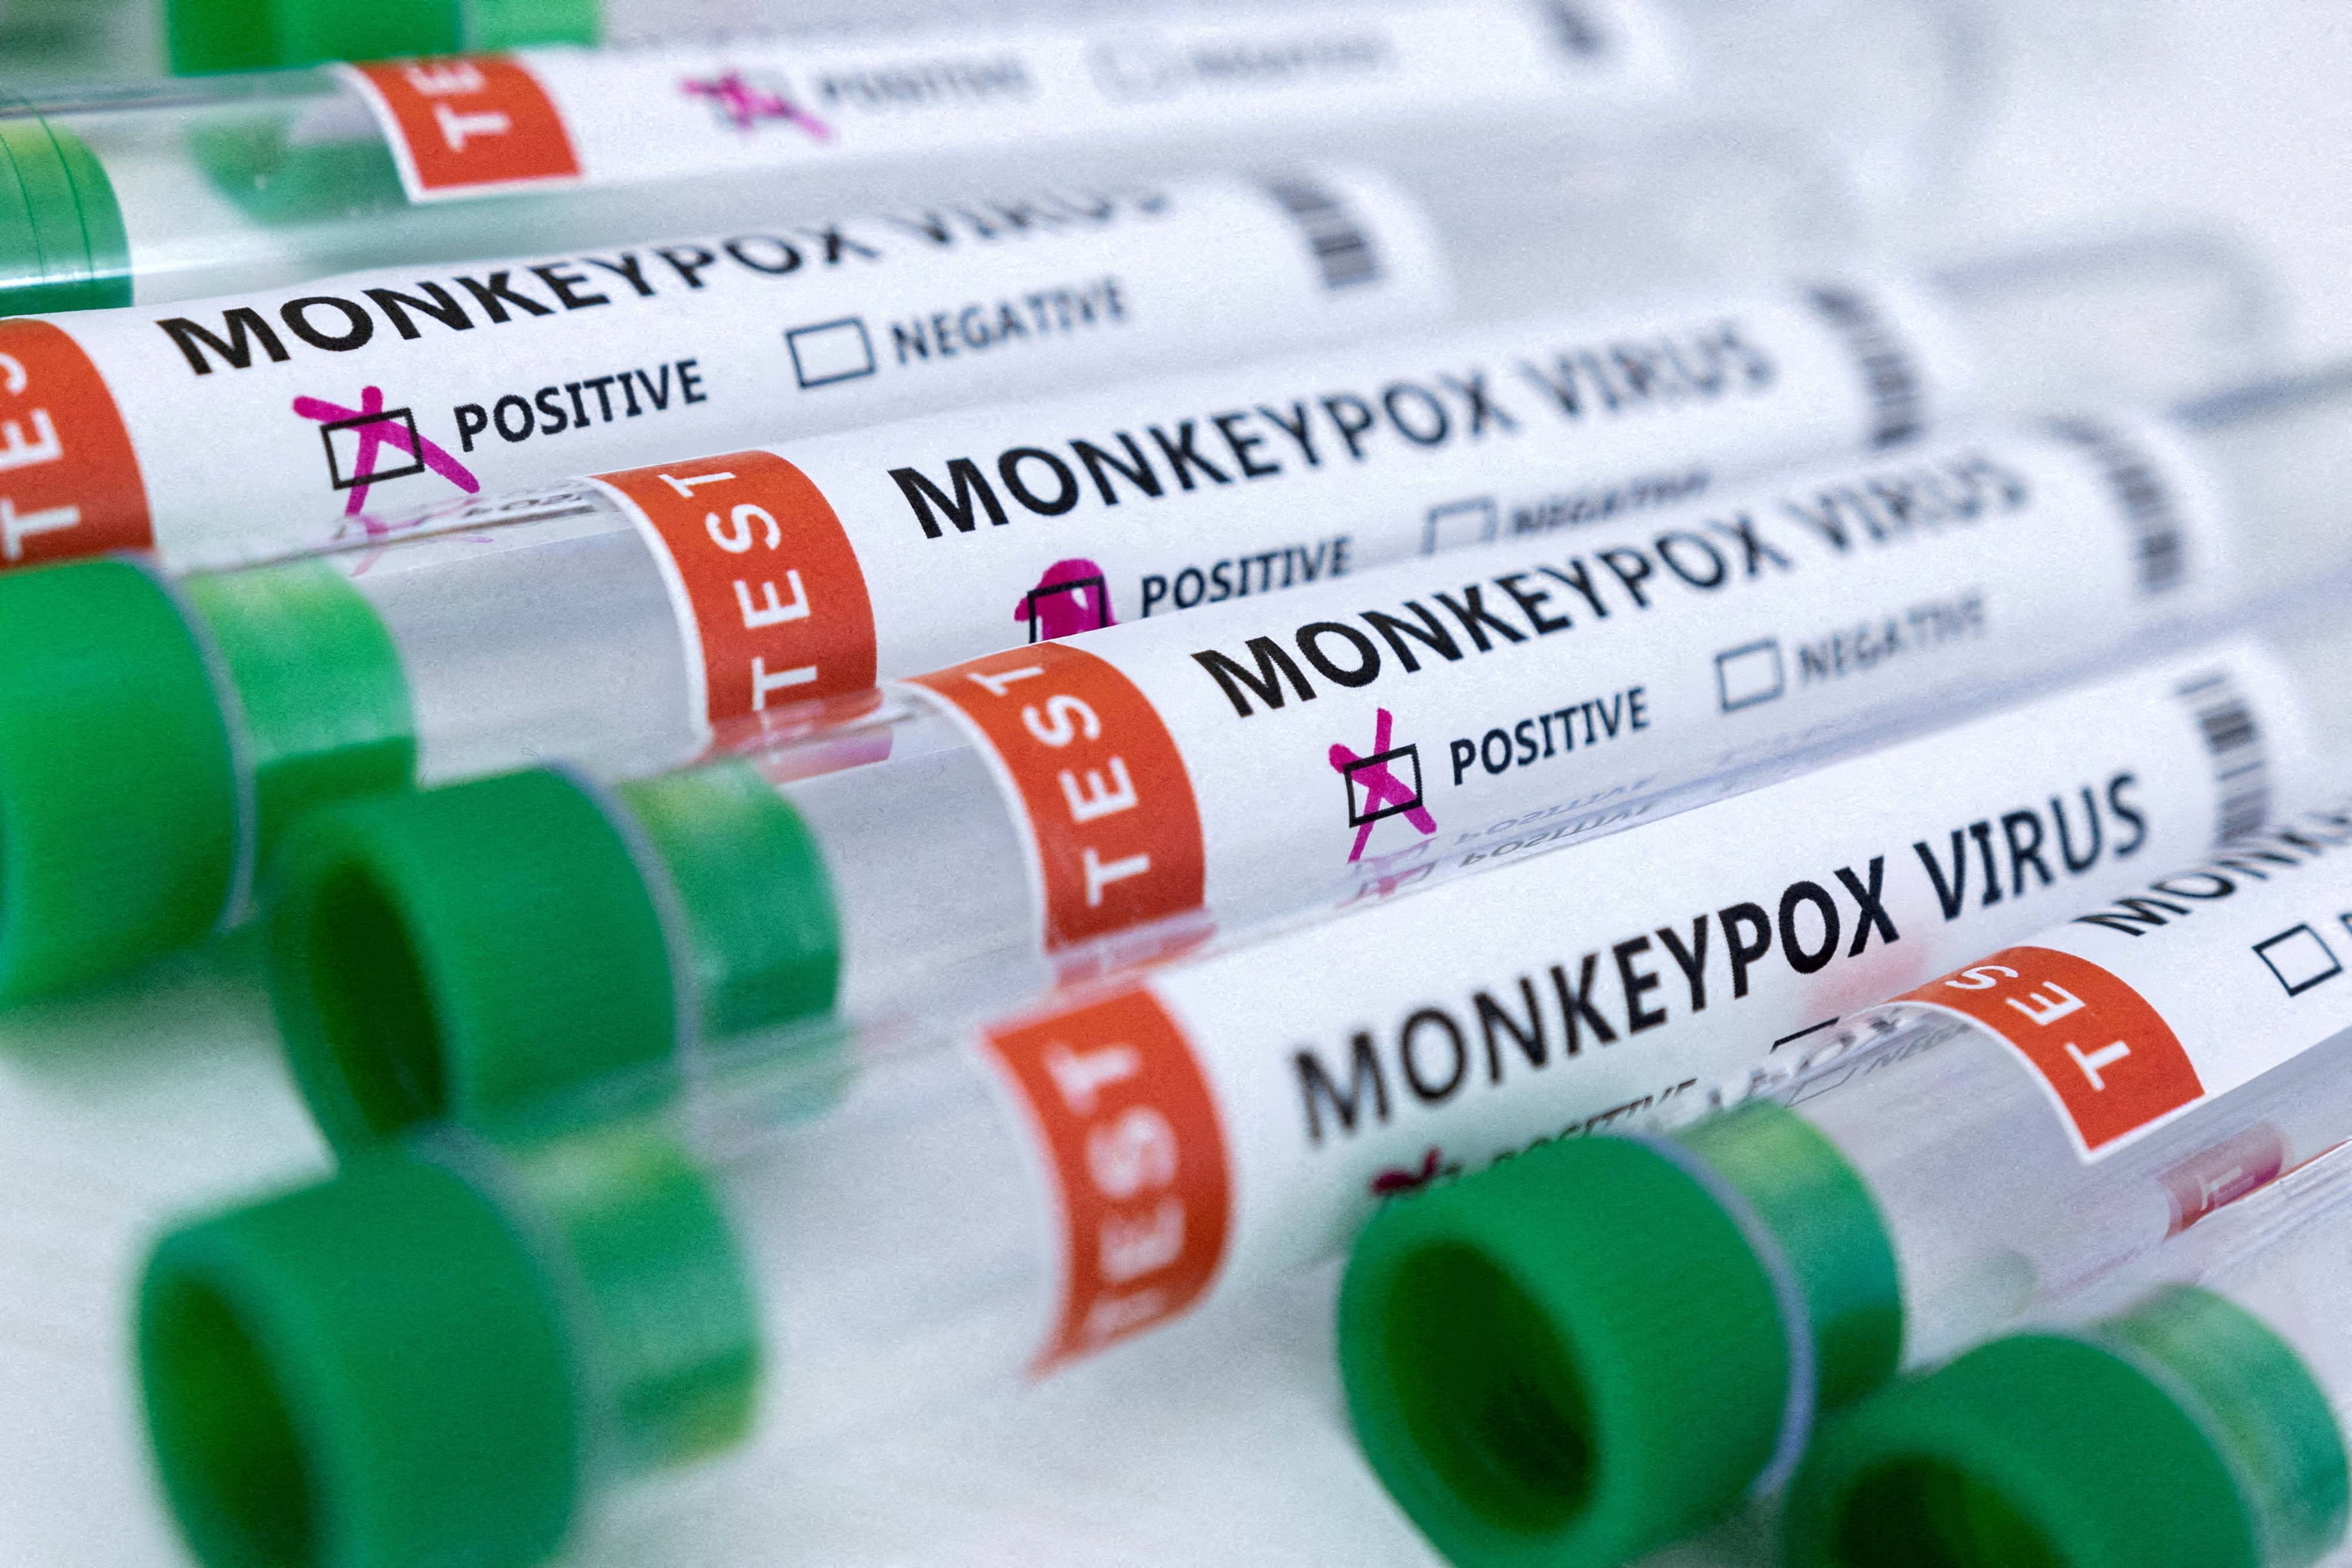 file-photo-illustration-shows-test-tubes-labelled-monkeypox-virus-positive-and-negative